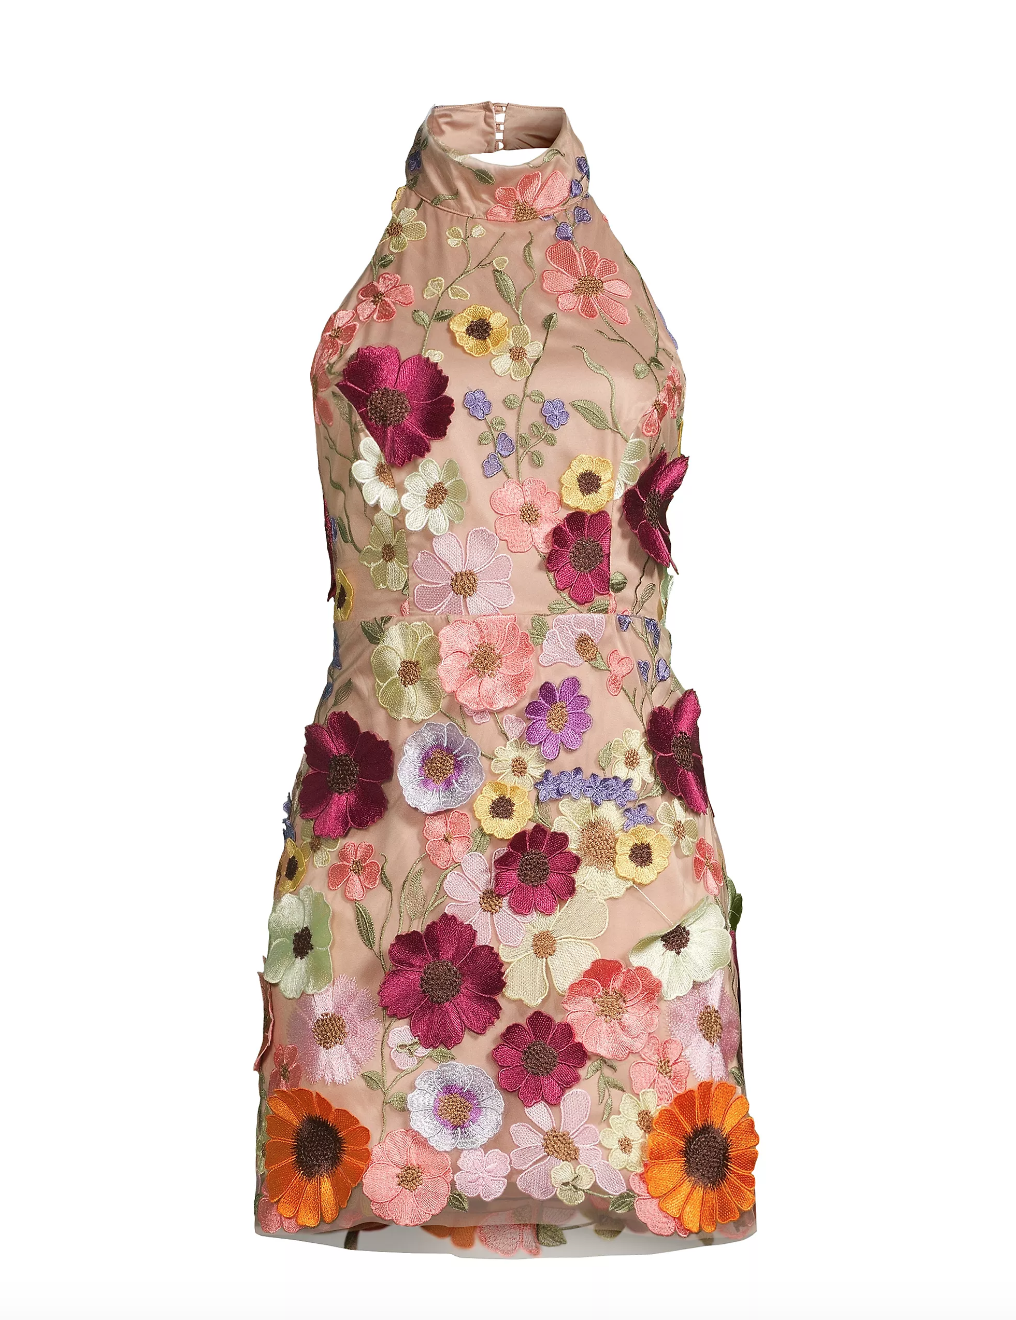 Teresa Giudice's Floral Applique Halterneck Dress